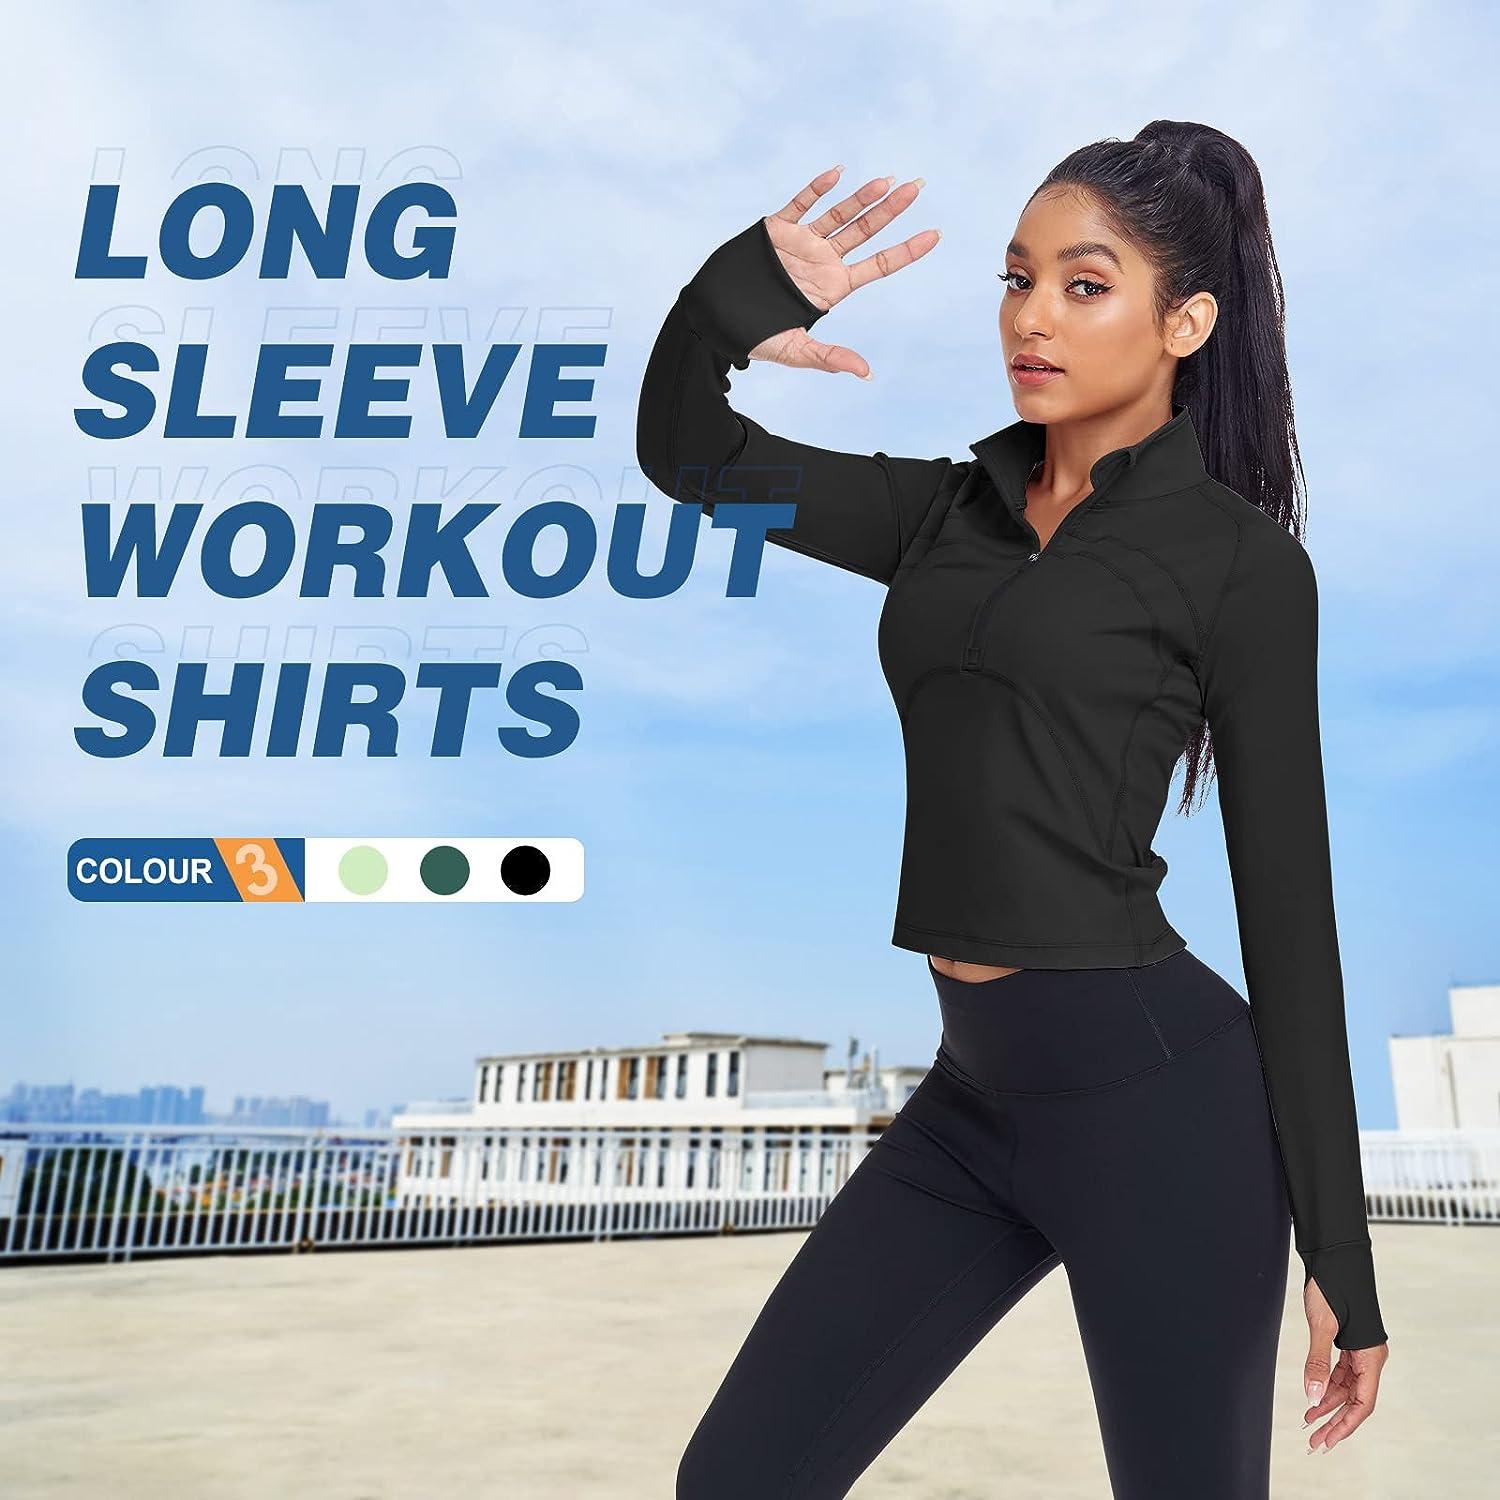 Women's Long Sleeve Workout Shirts in Black